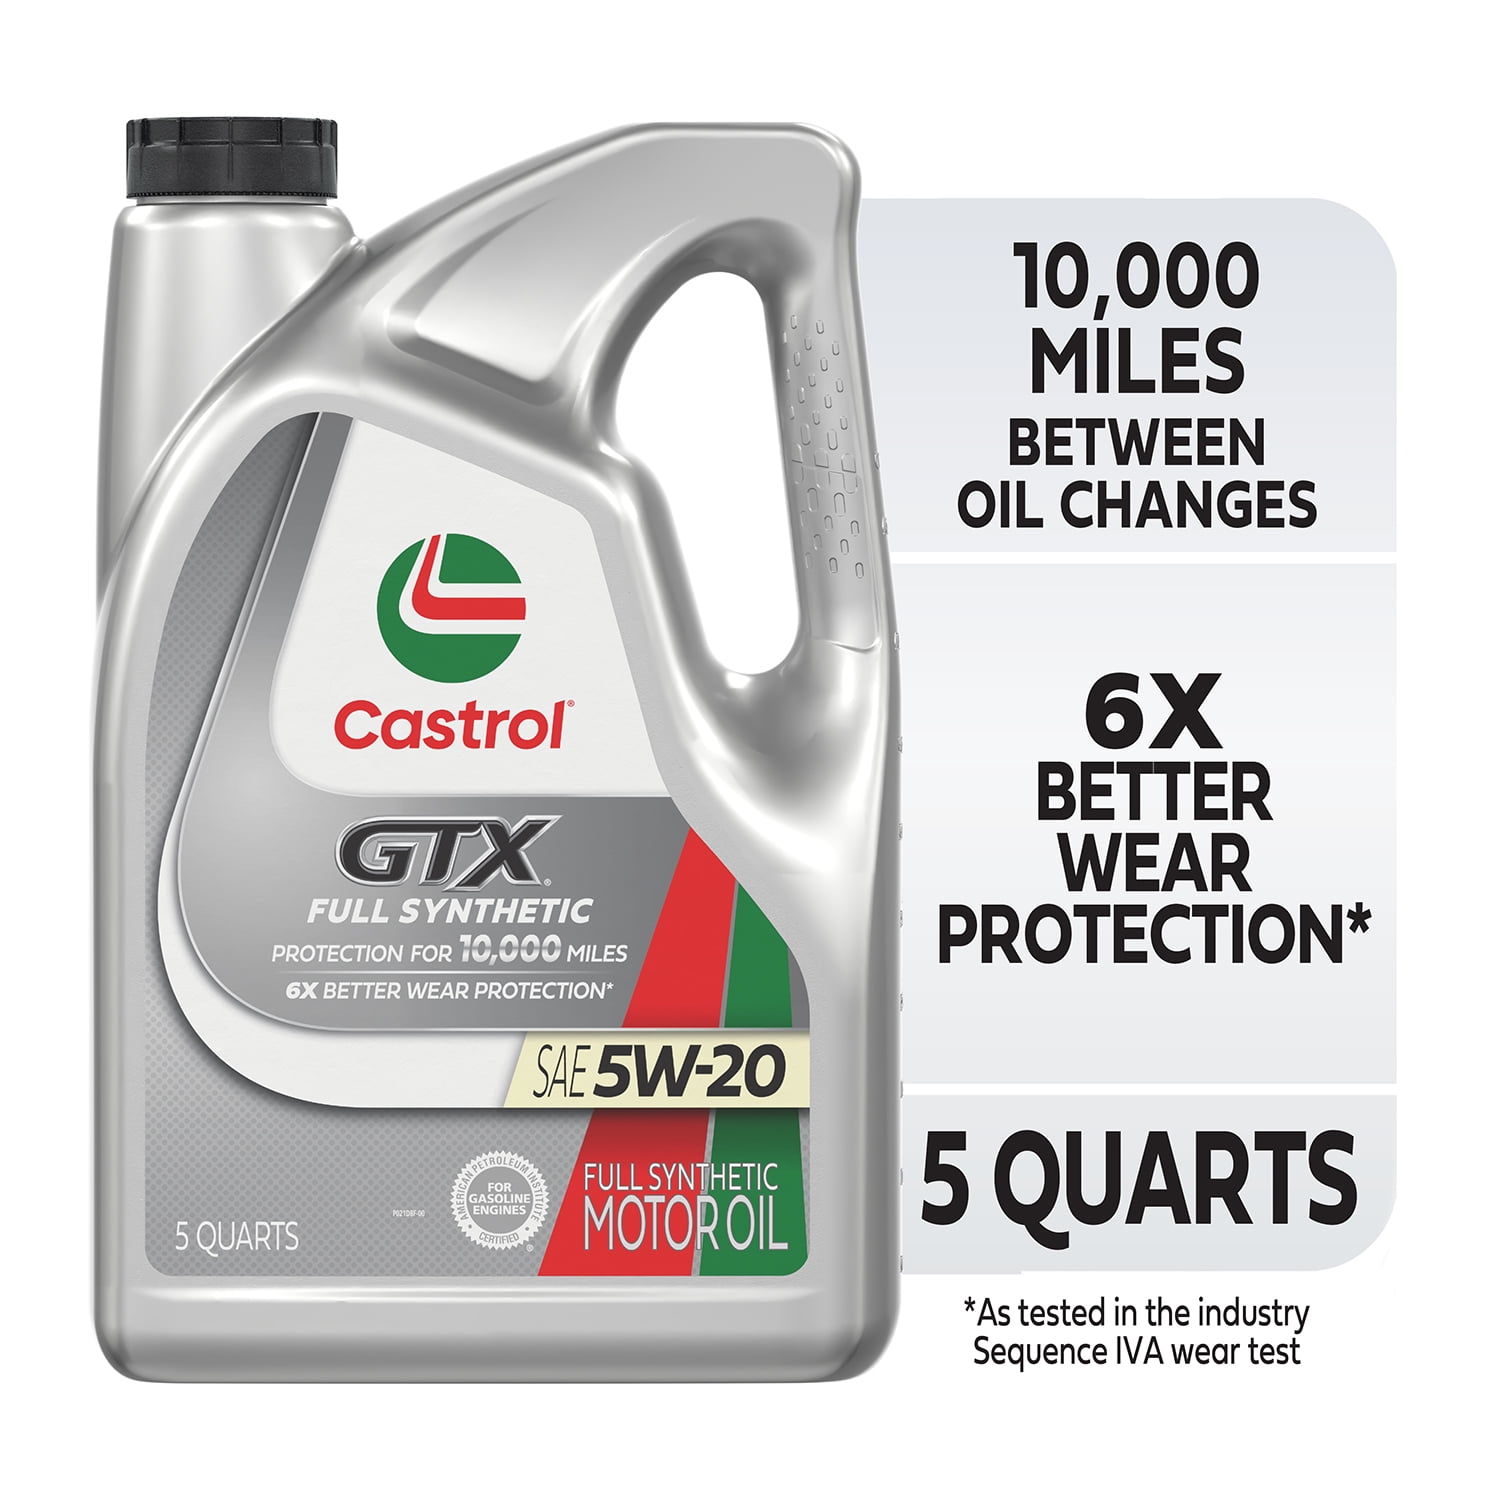 Castrol GTX Full Synthetic 0W-20 Motor Oil